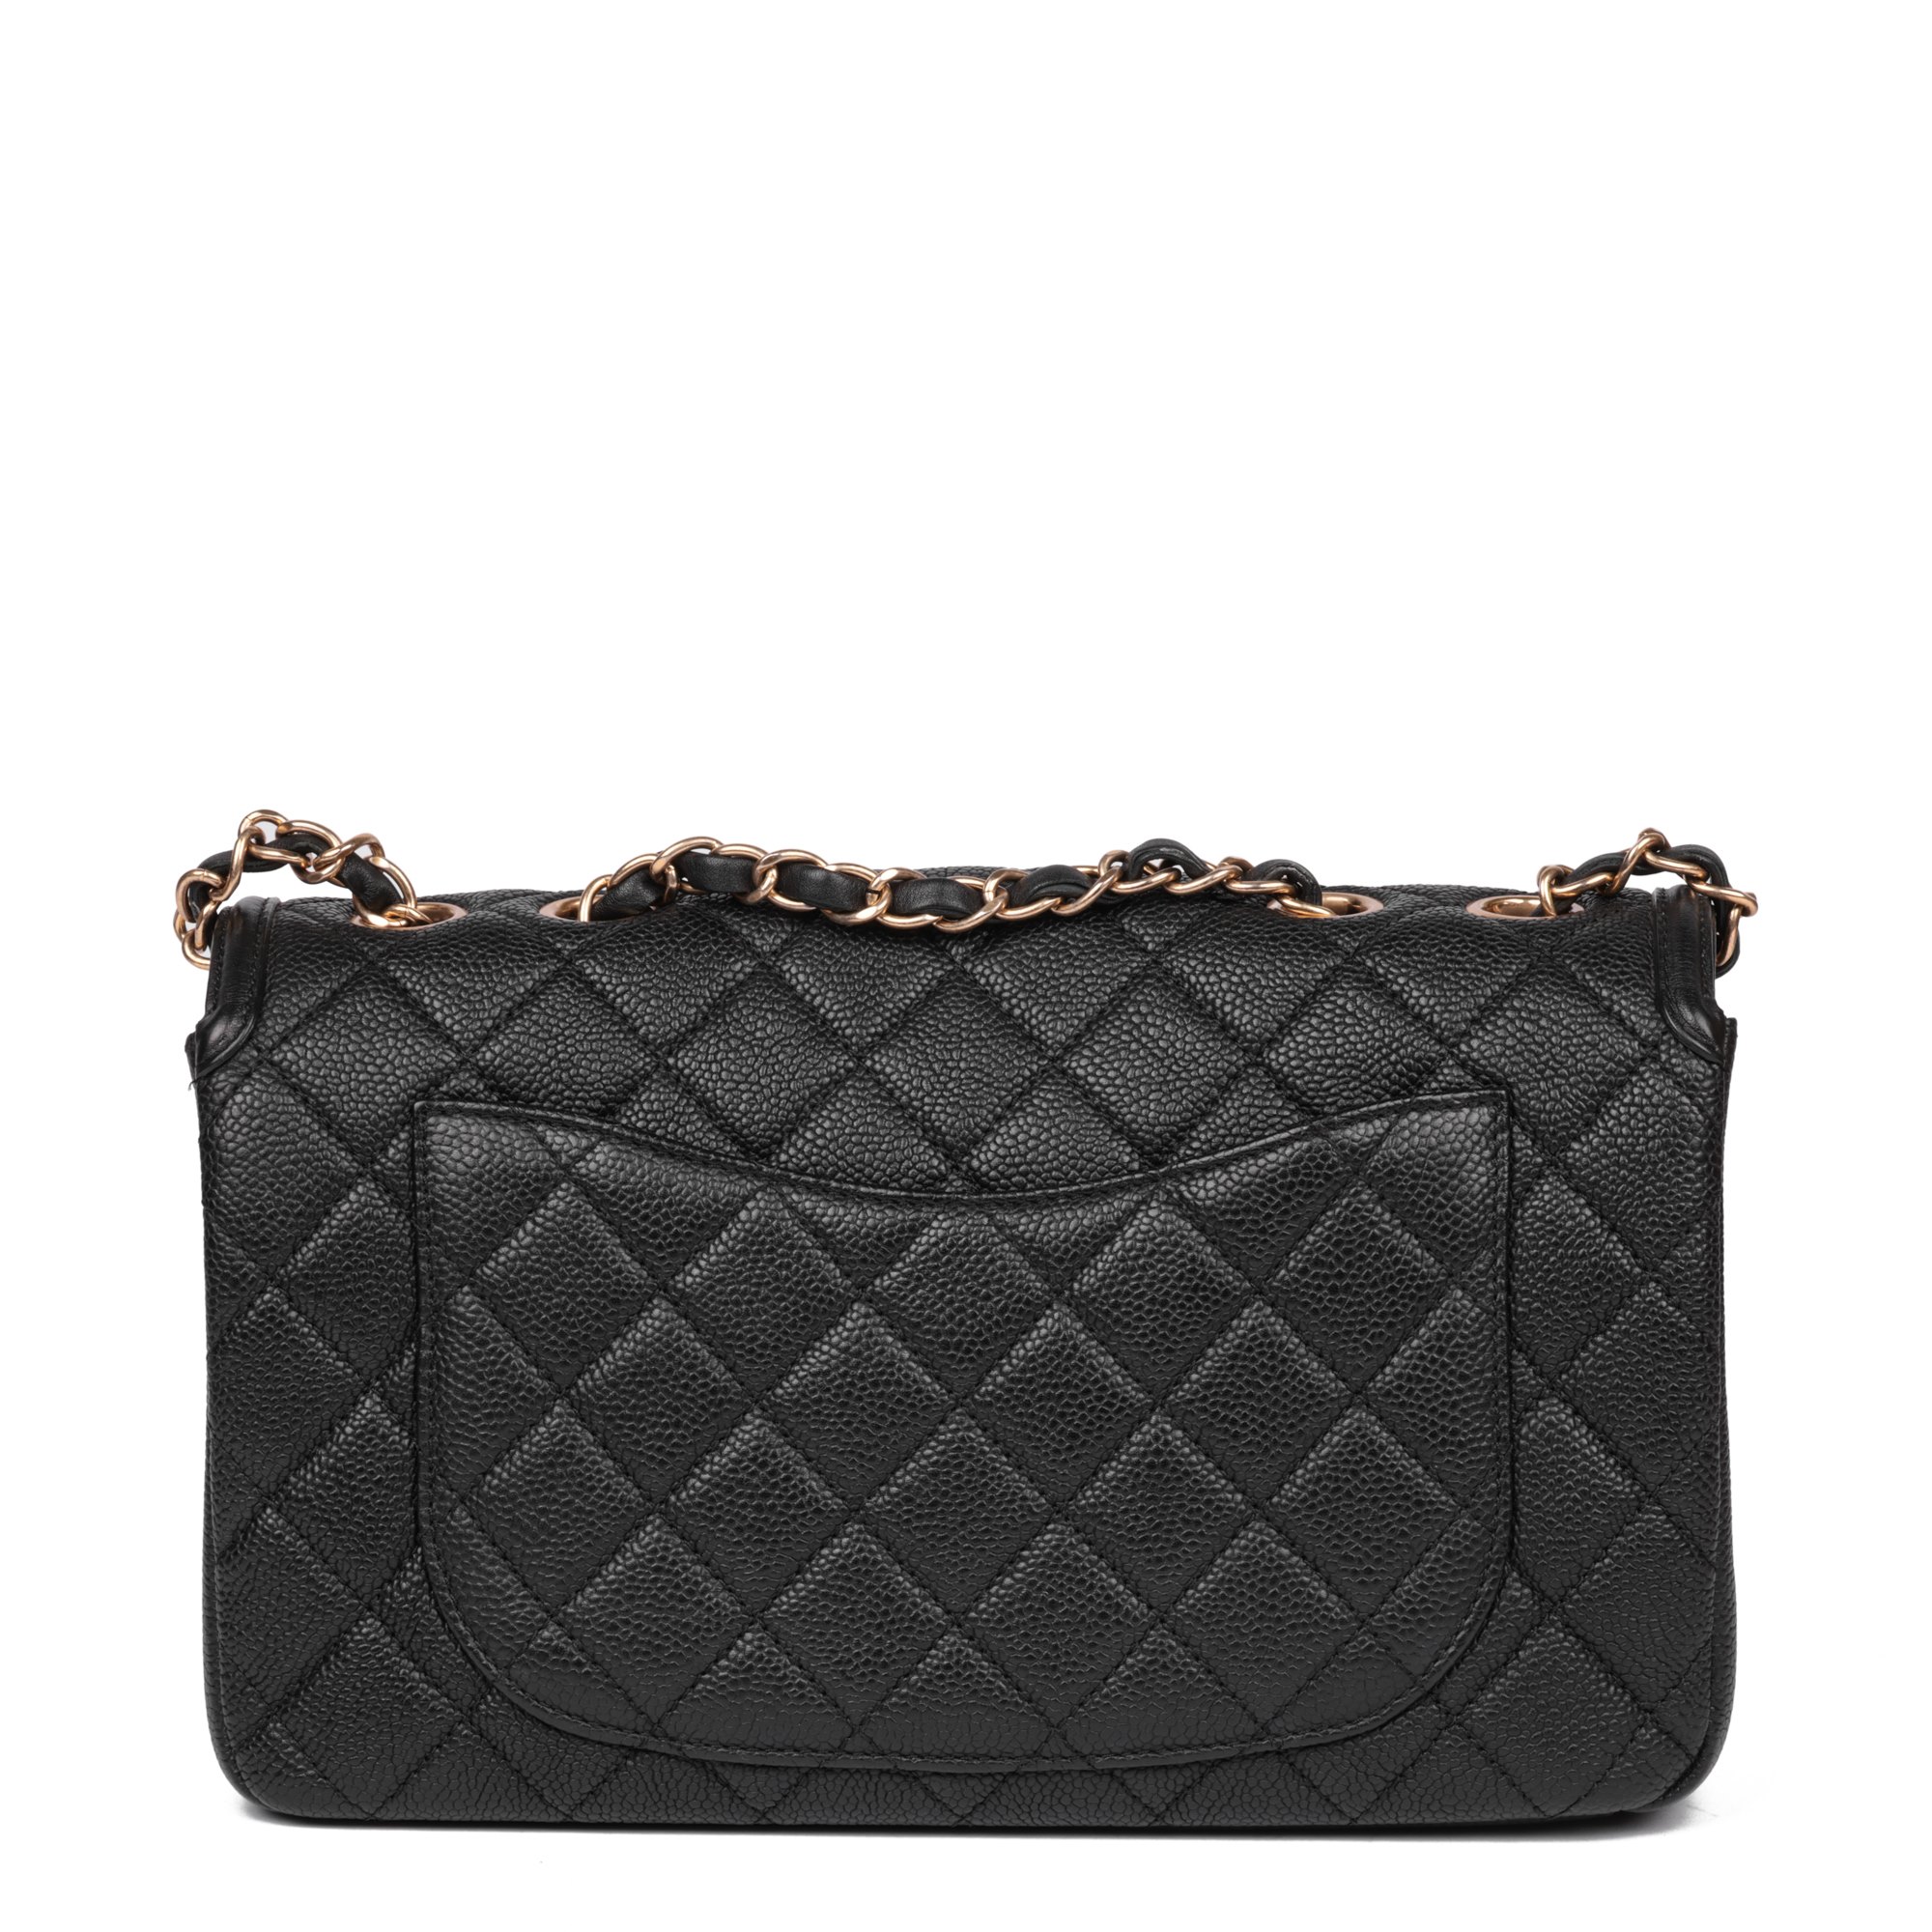 Chanel Black Quilted Caviar Leather Medium Filigree Flap Bag